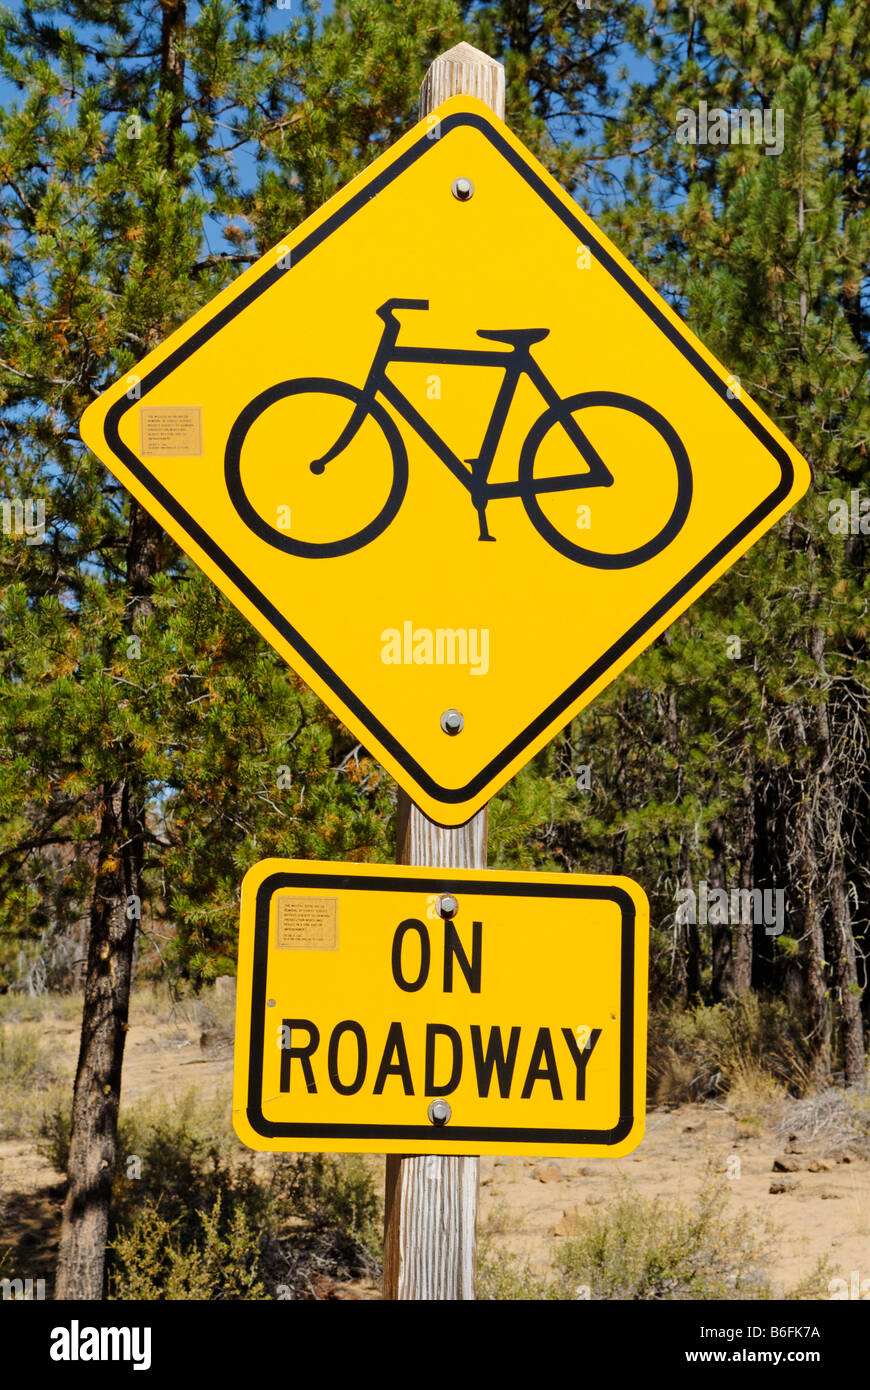 Road sign, bicycle on a yellow diamond, USA Stock Photo